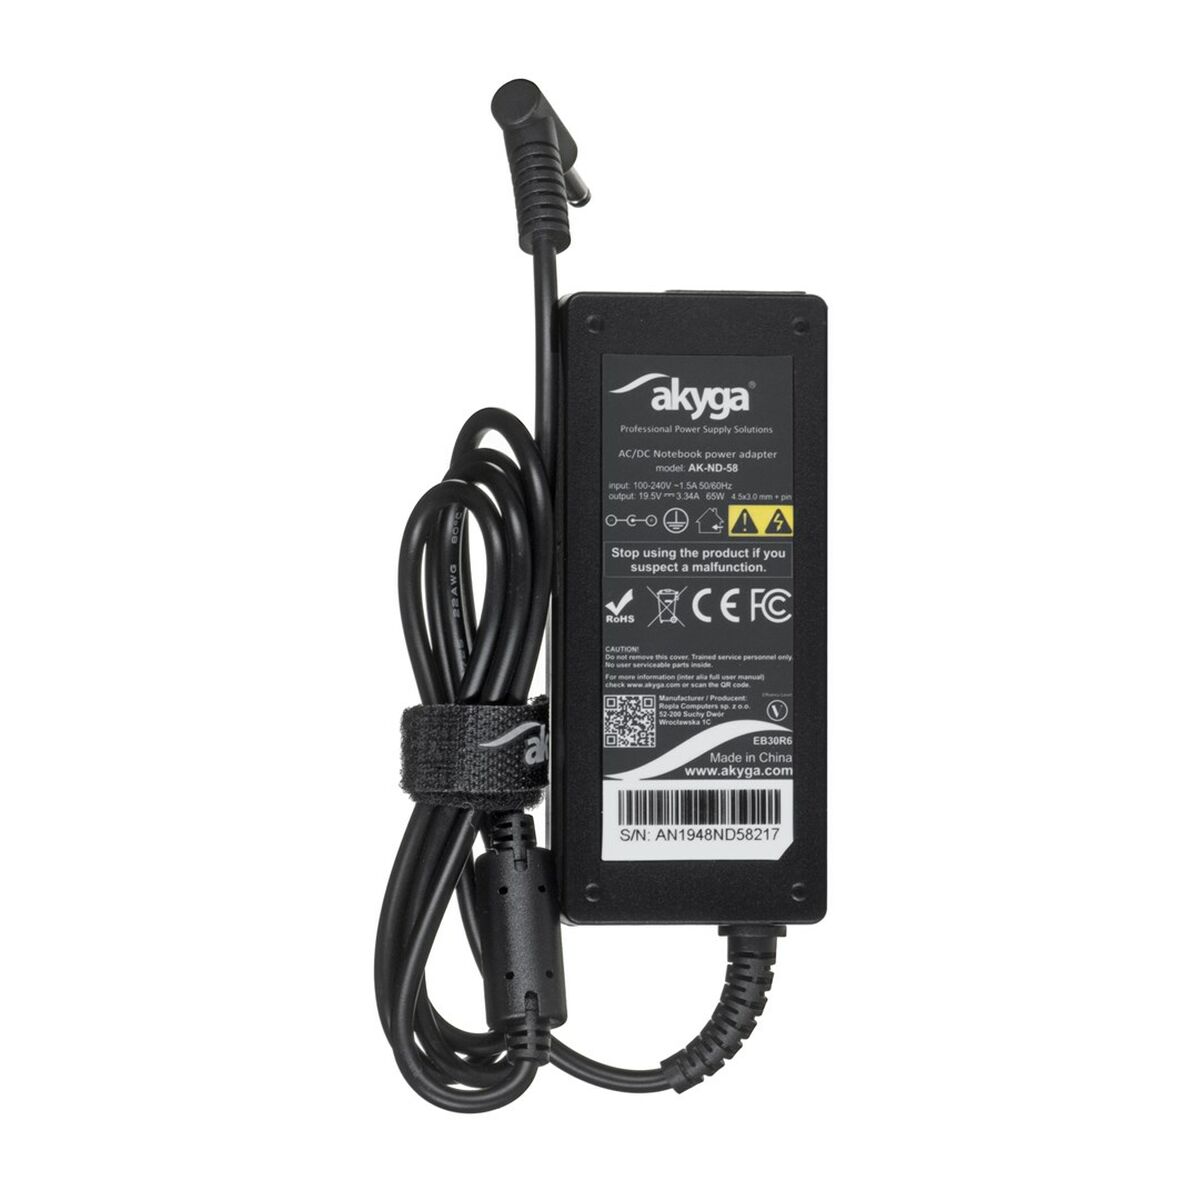 Nox NXPWR65NB Universal USB 65W - Cargador Portátil